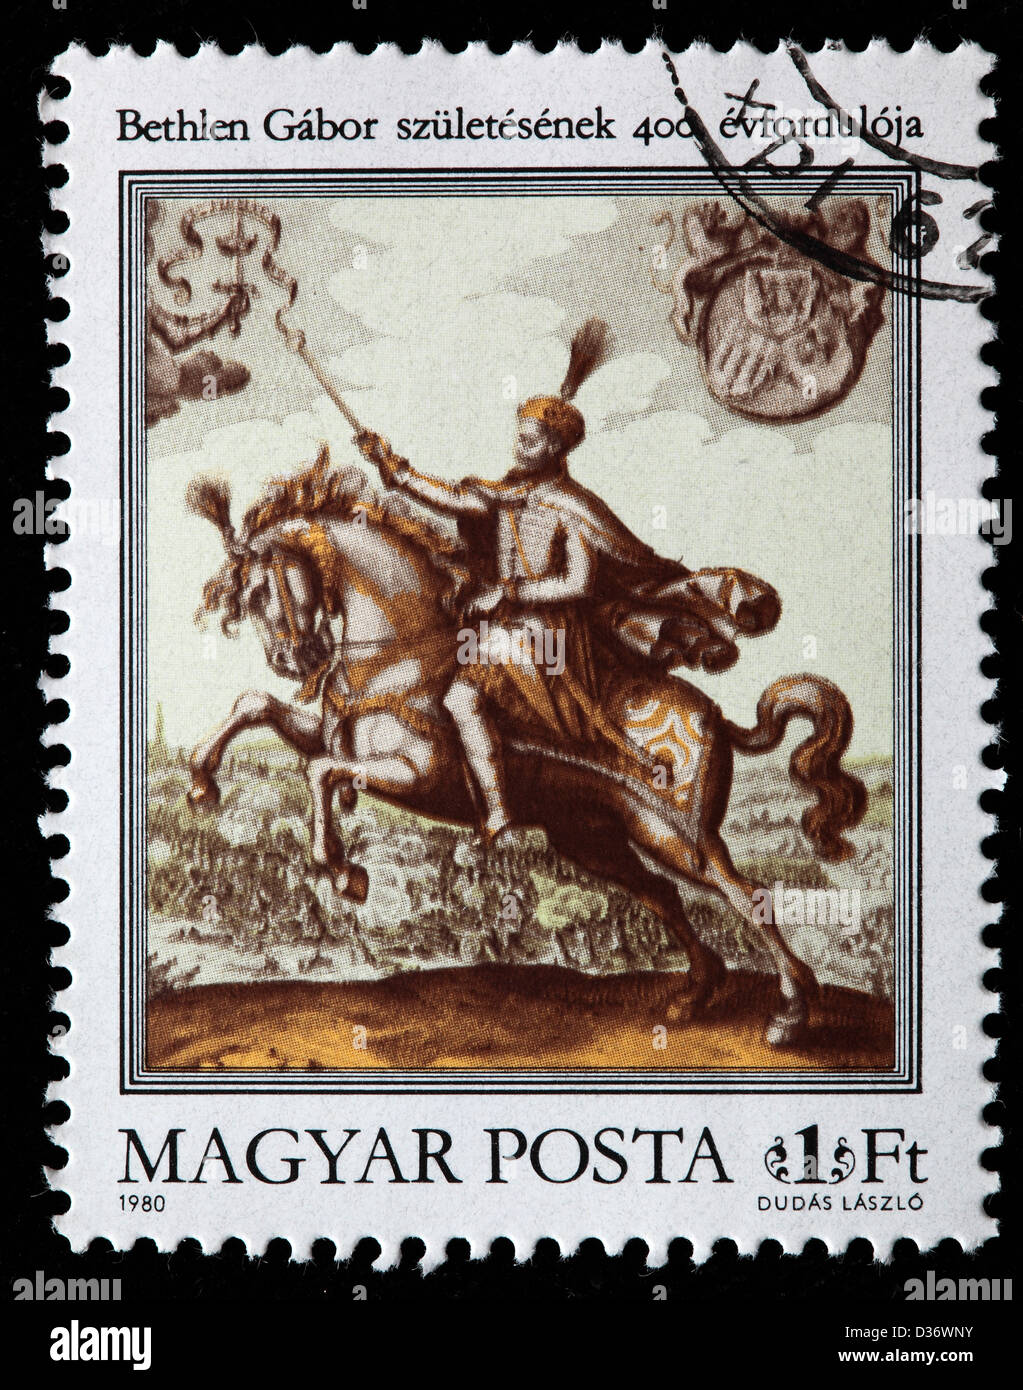 Gabor Bethlen, postage stamp, Hungary, 1980 Stock Photo